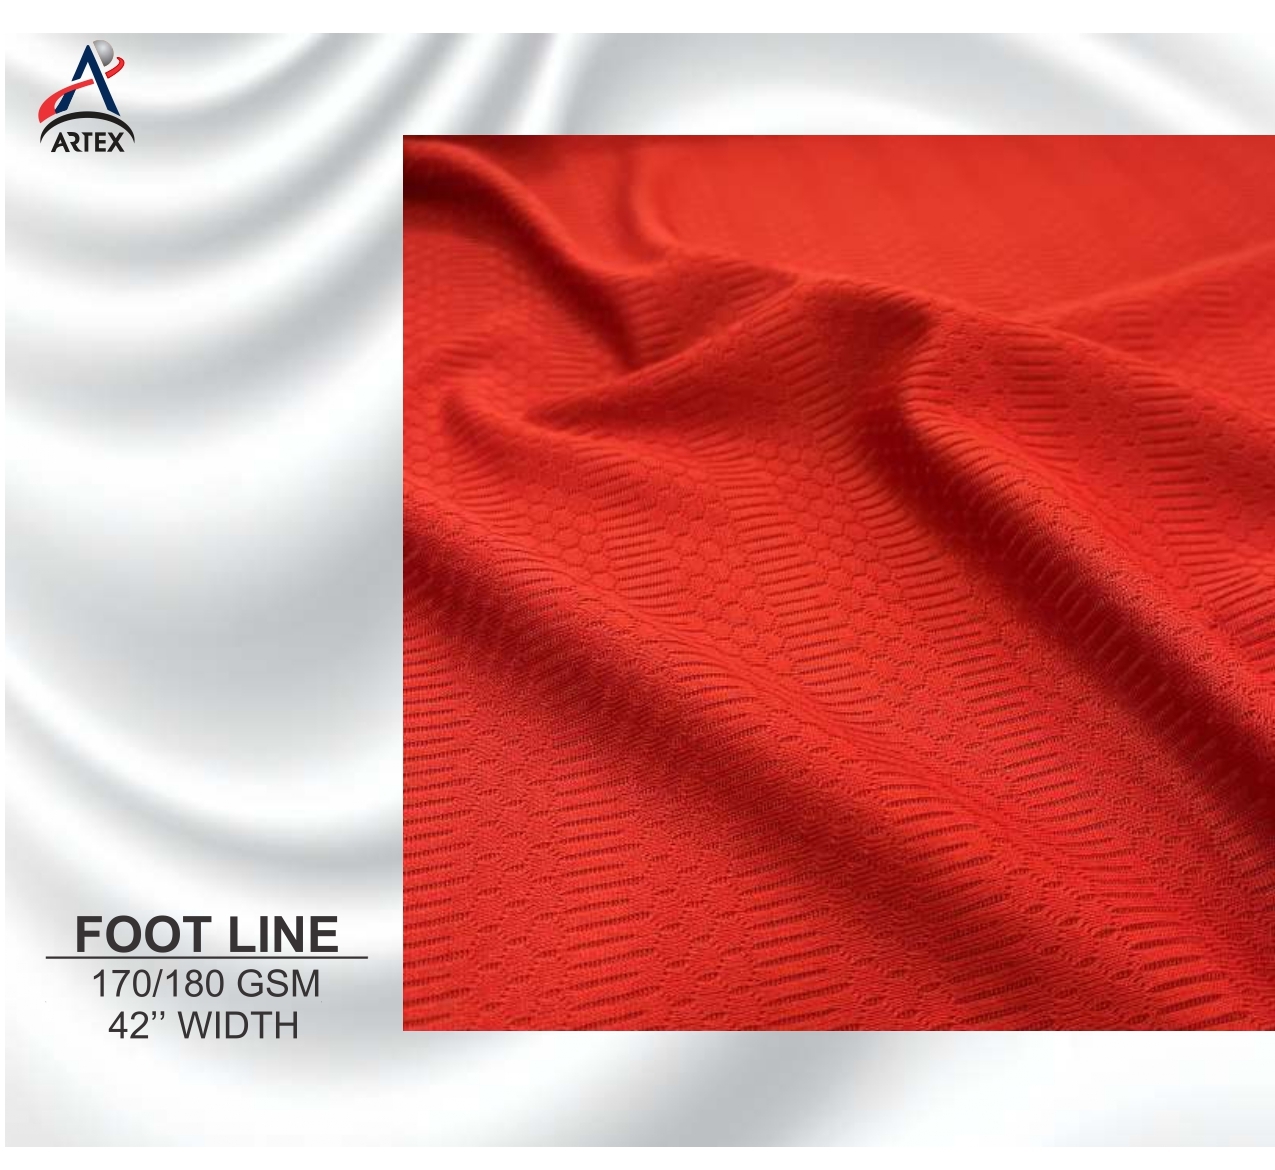 Foot line fabric